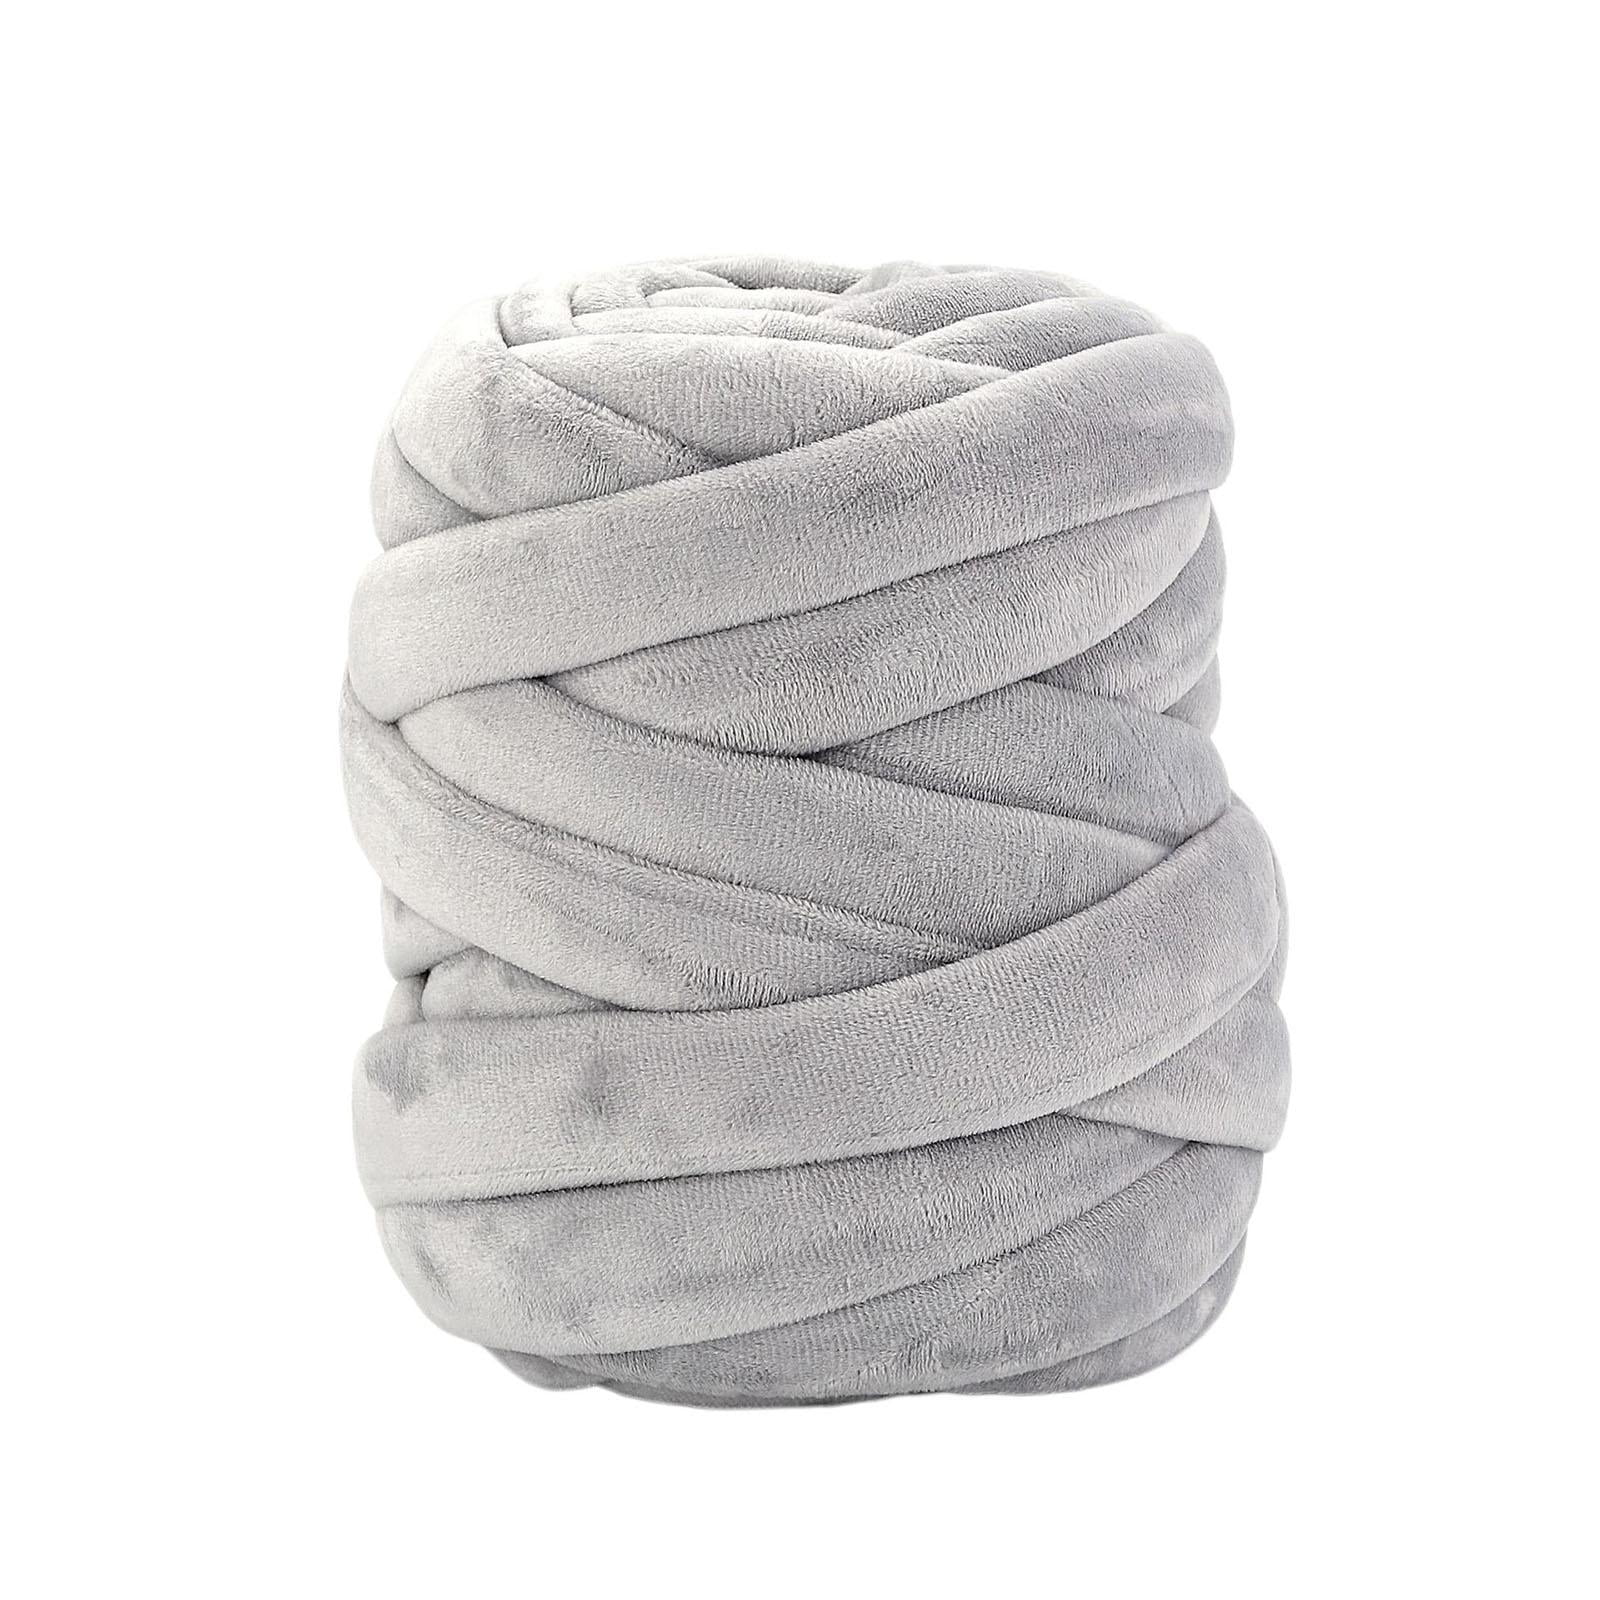 Chunky Yarn Jumbo Tubular Yarn Arm Knit Yarn Crocheting Hand Knit Washable Soft 250g Weight Yarn for Crochet Pillow Baskets Pet Bed Sweaters Gray